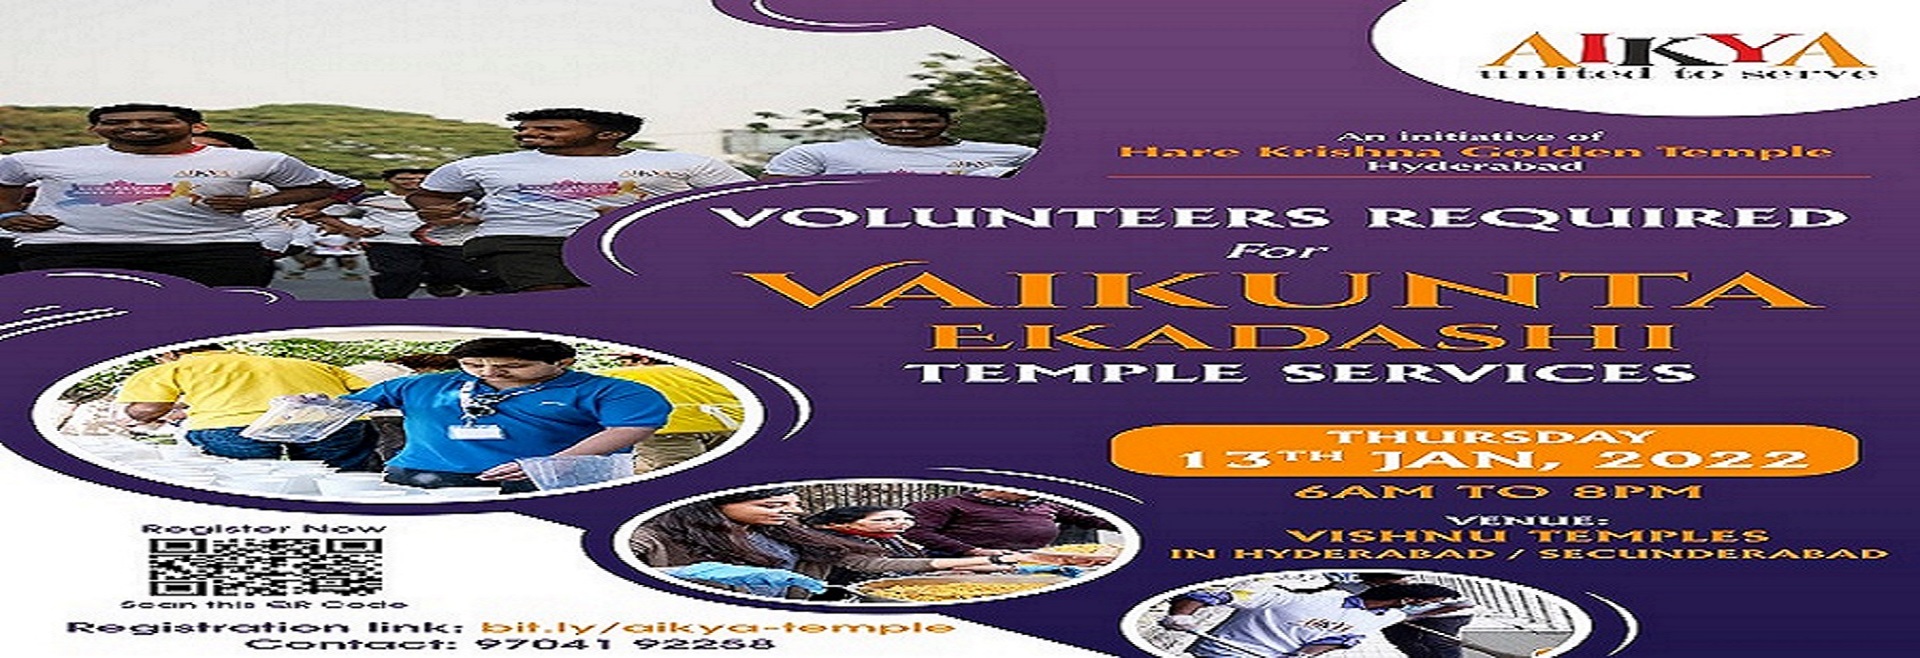 Vaikuntha Ekadashi Volunteering - January 13th, Hyderabad, Telangana, India